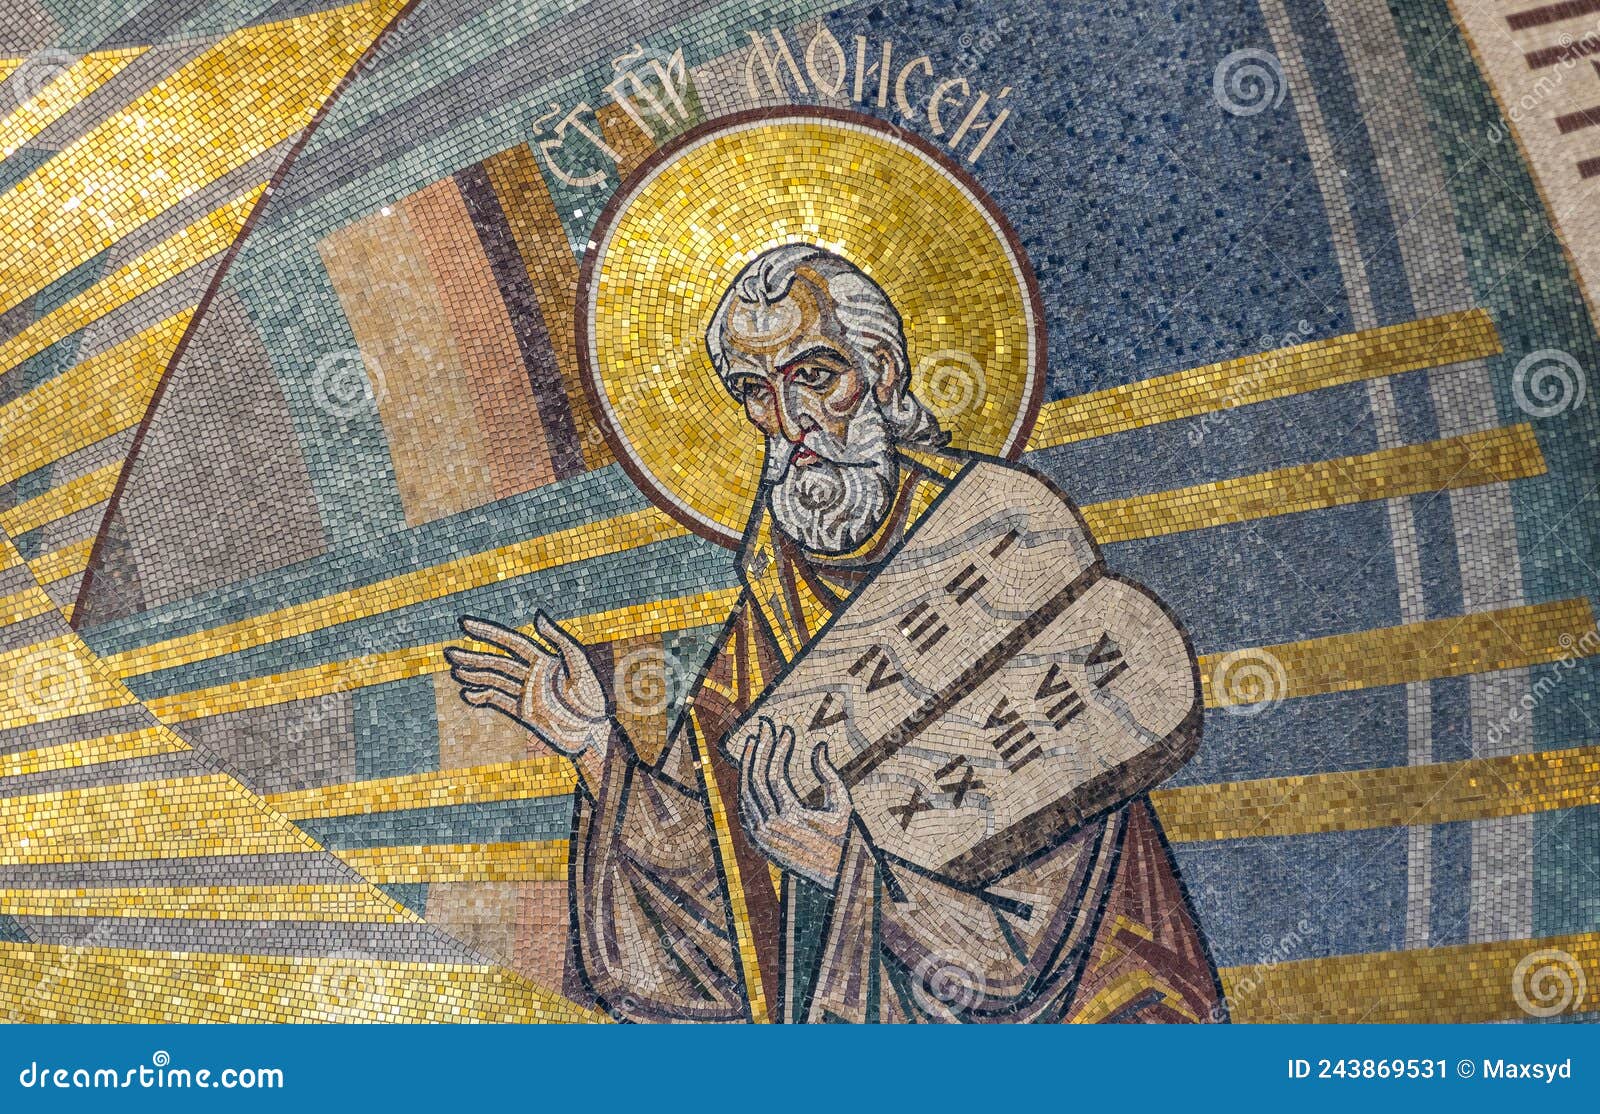 mosaic-icon-old-testament-prophet-moses-orthodox-church-243869531.jpg